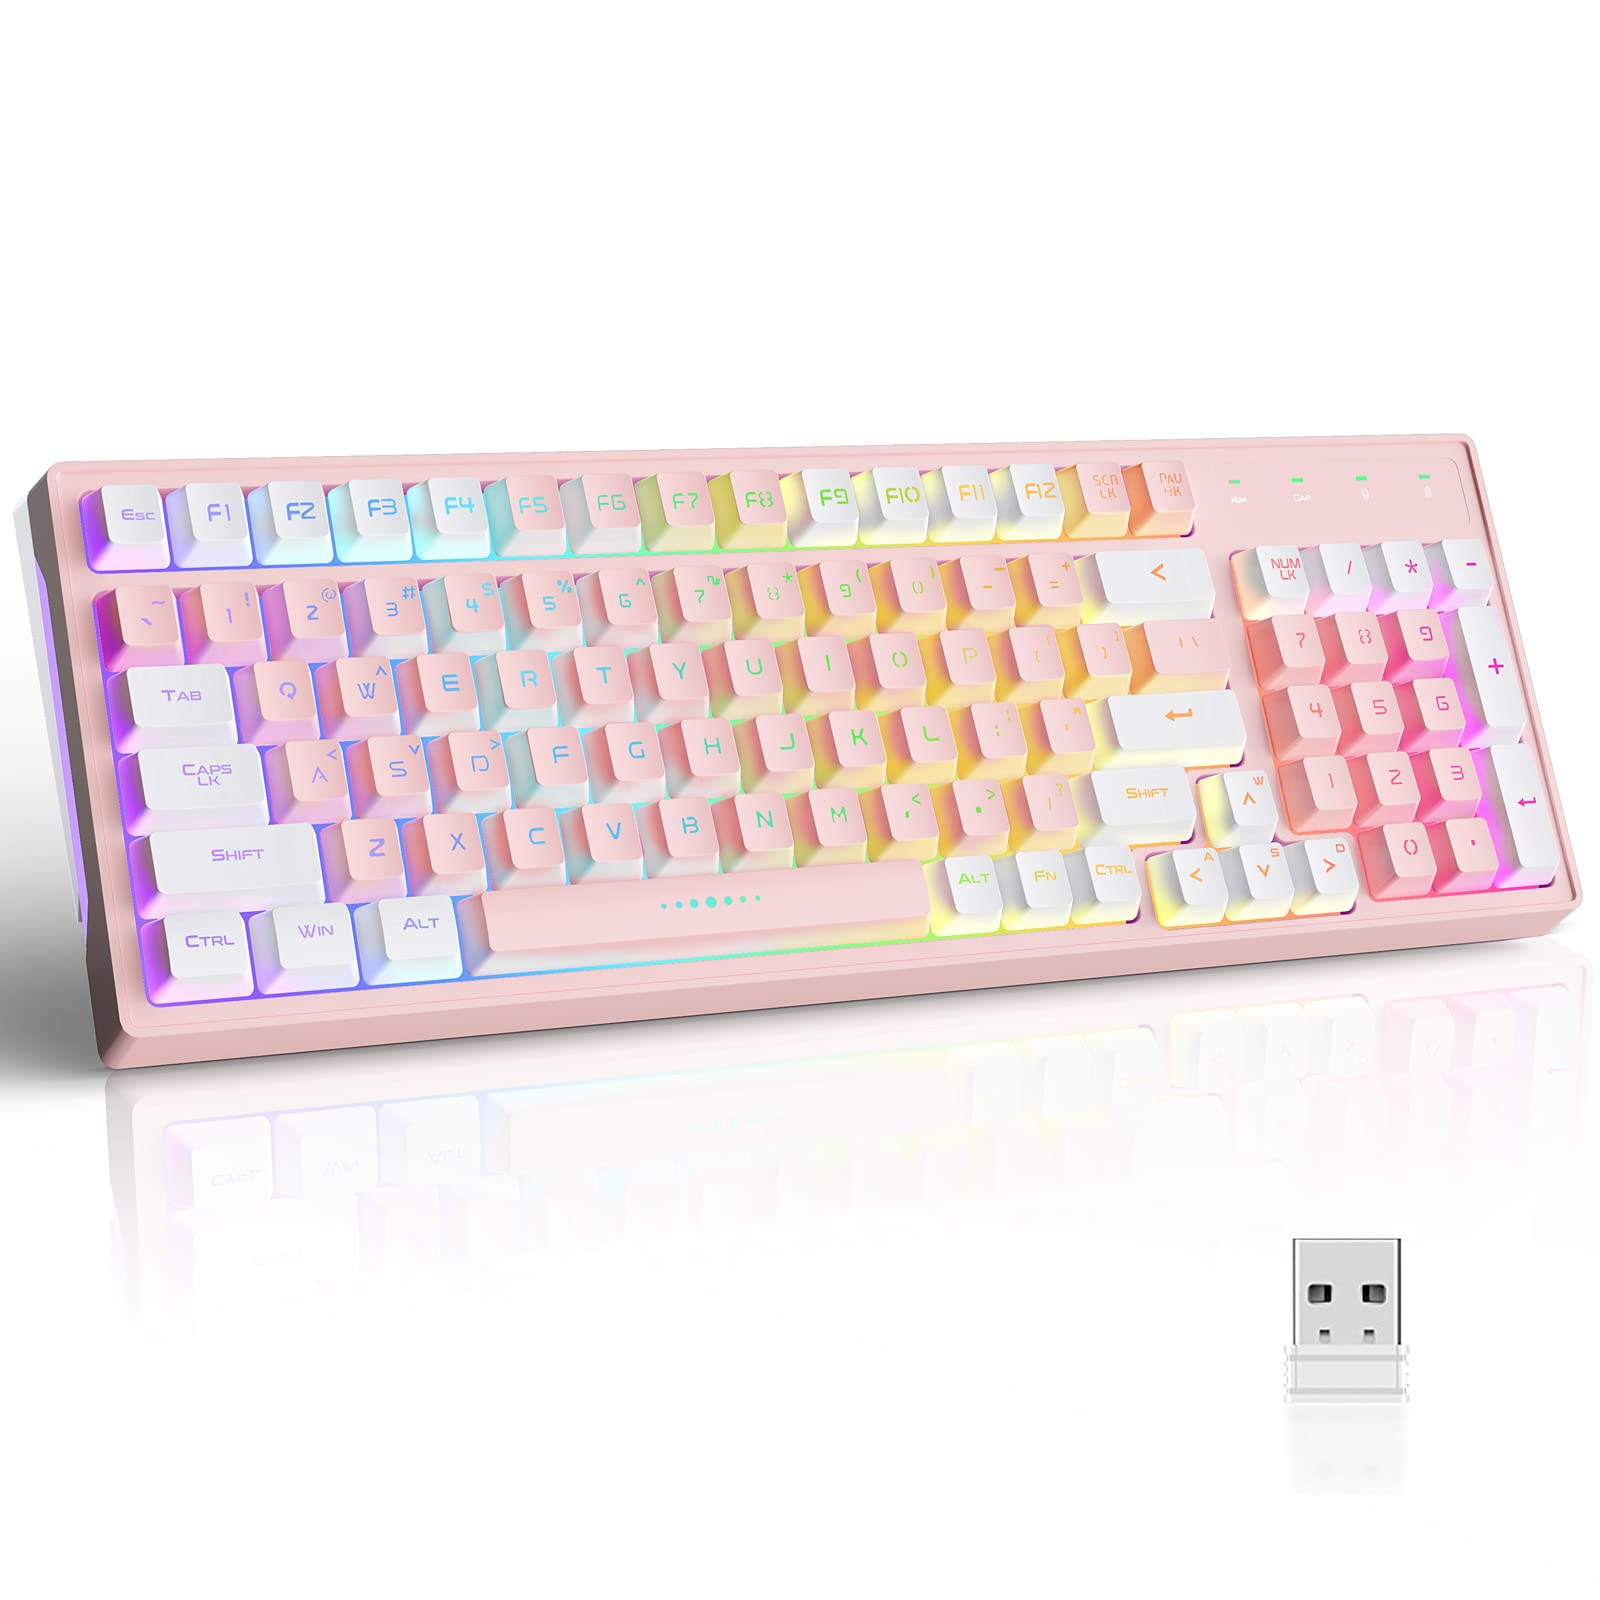 GK98 Wireless Gaming Keyboard2.4G Rechargeable RGB Pink KeyboardRGB Backlit Ergonomic 98 keys Dual Color Mechanical Feeling